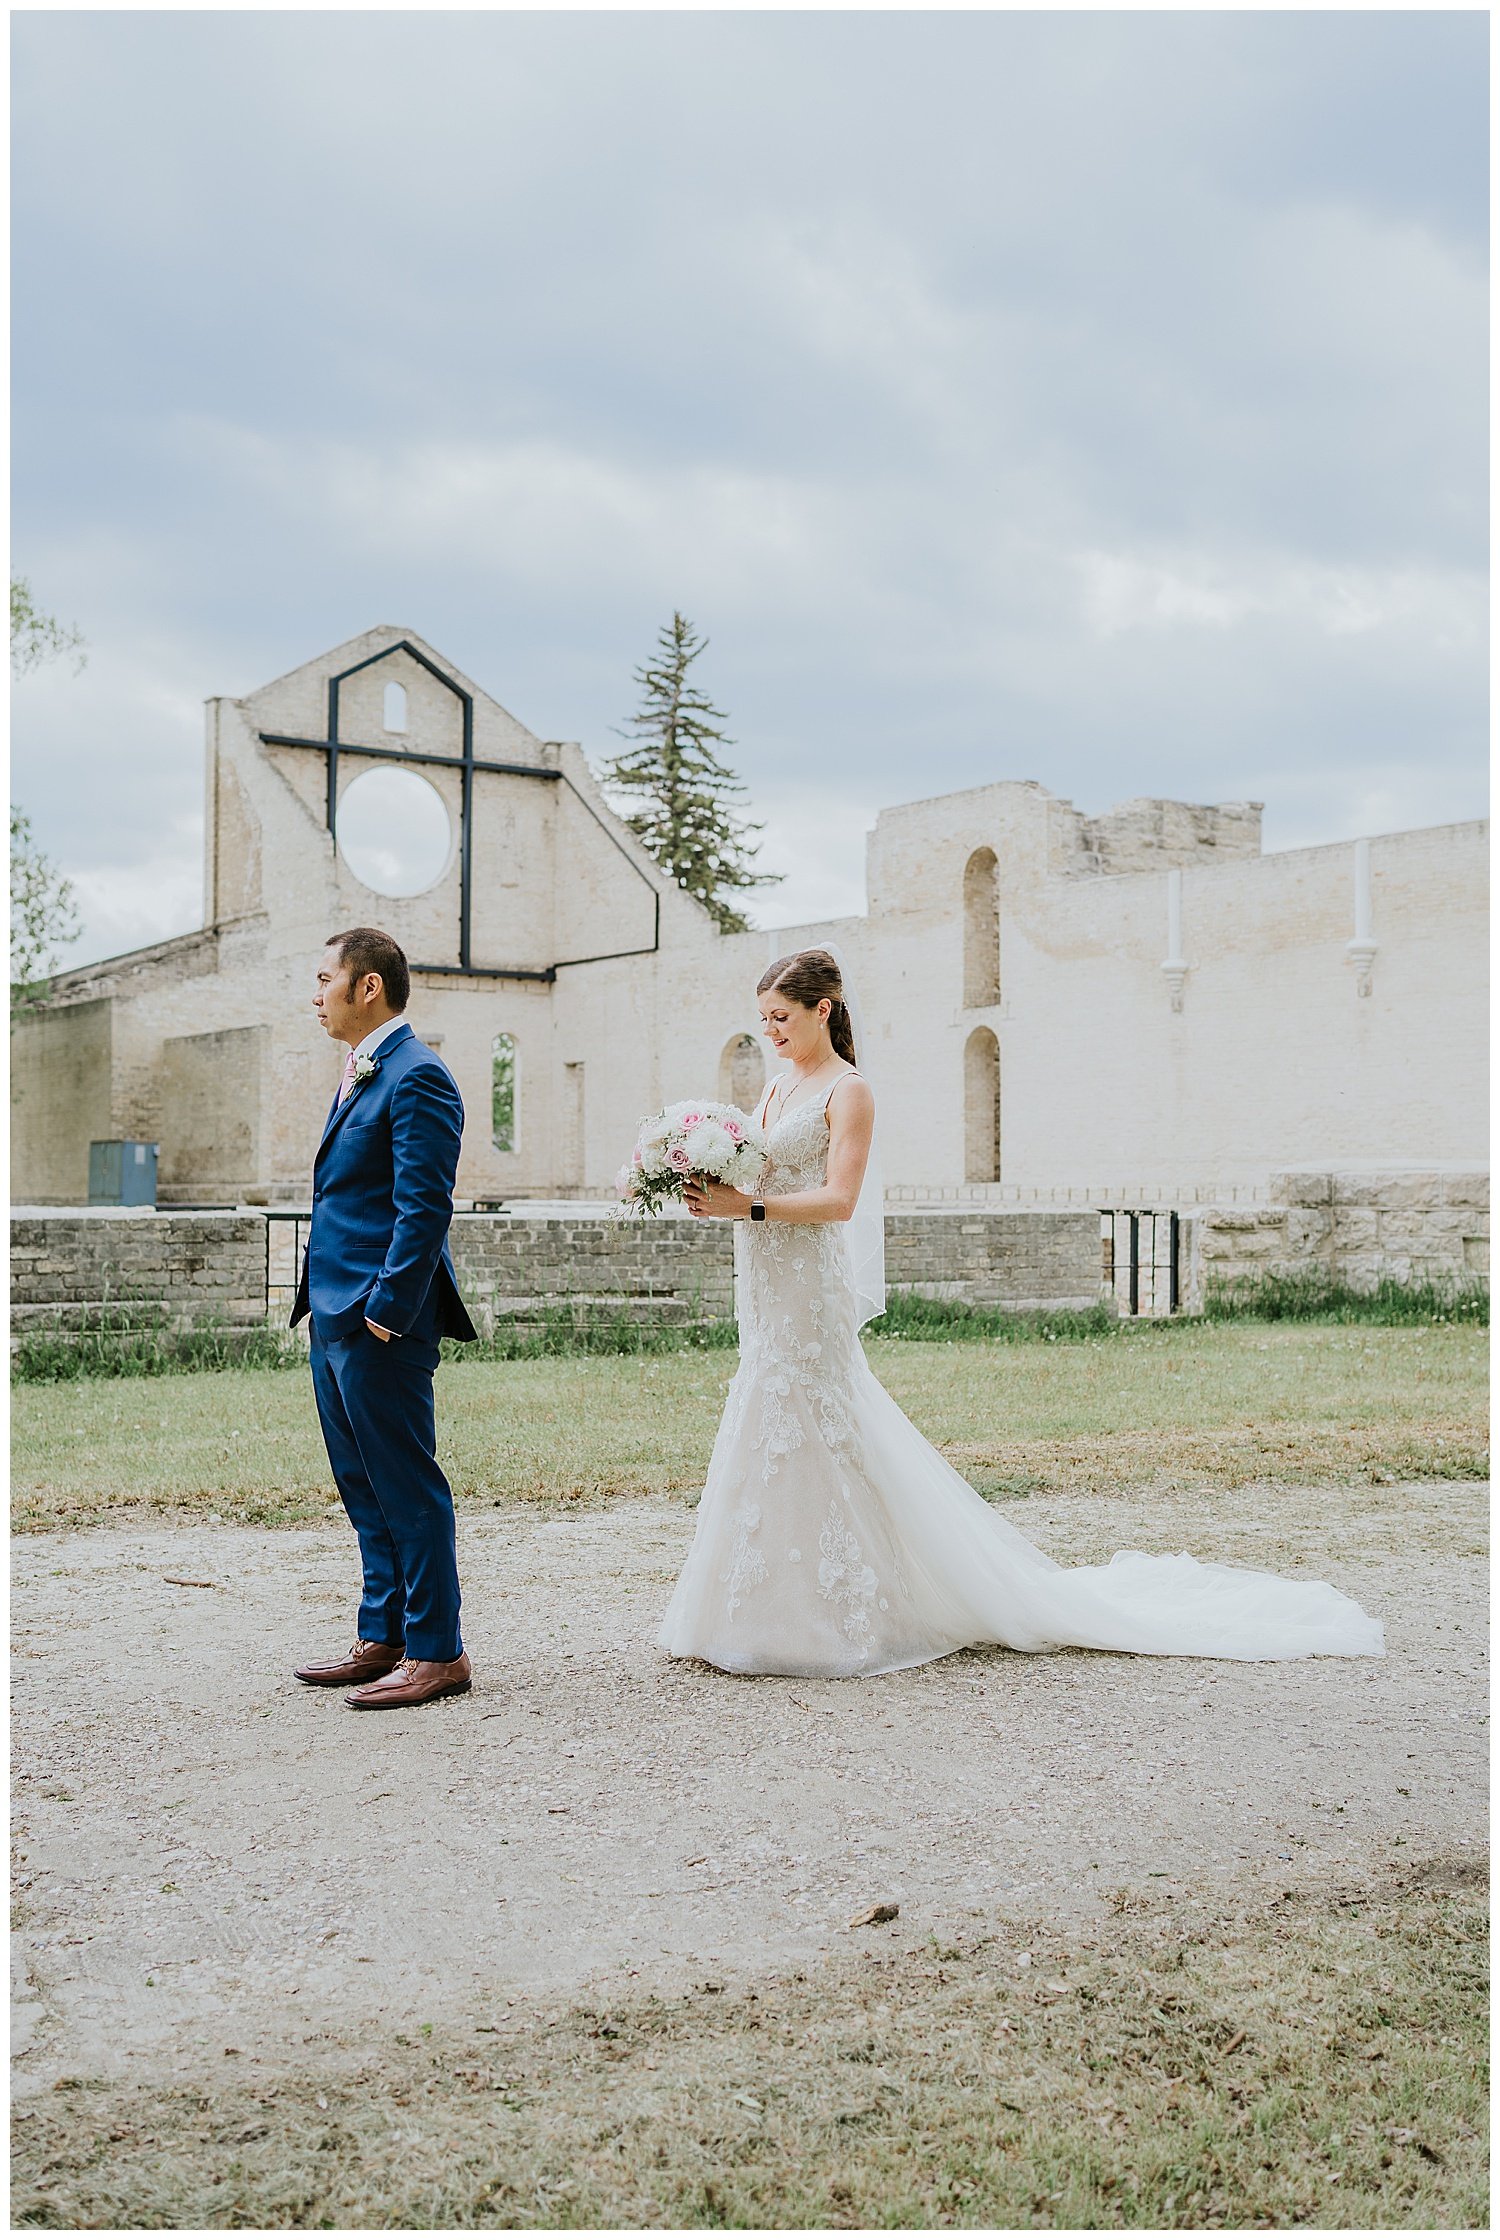 Carrie & Rolando's Intimate Backyard Wedding : Trappist Monastery Provincial Heritage Park Winnipeg Manitoba  5.jpg